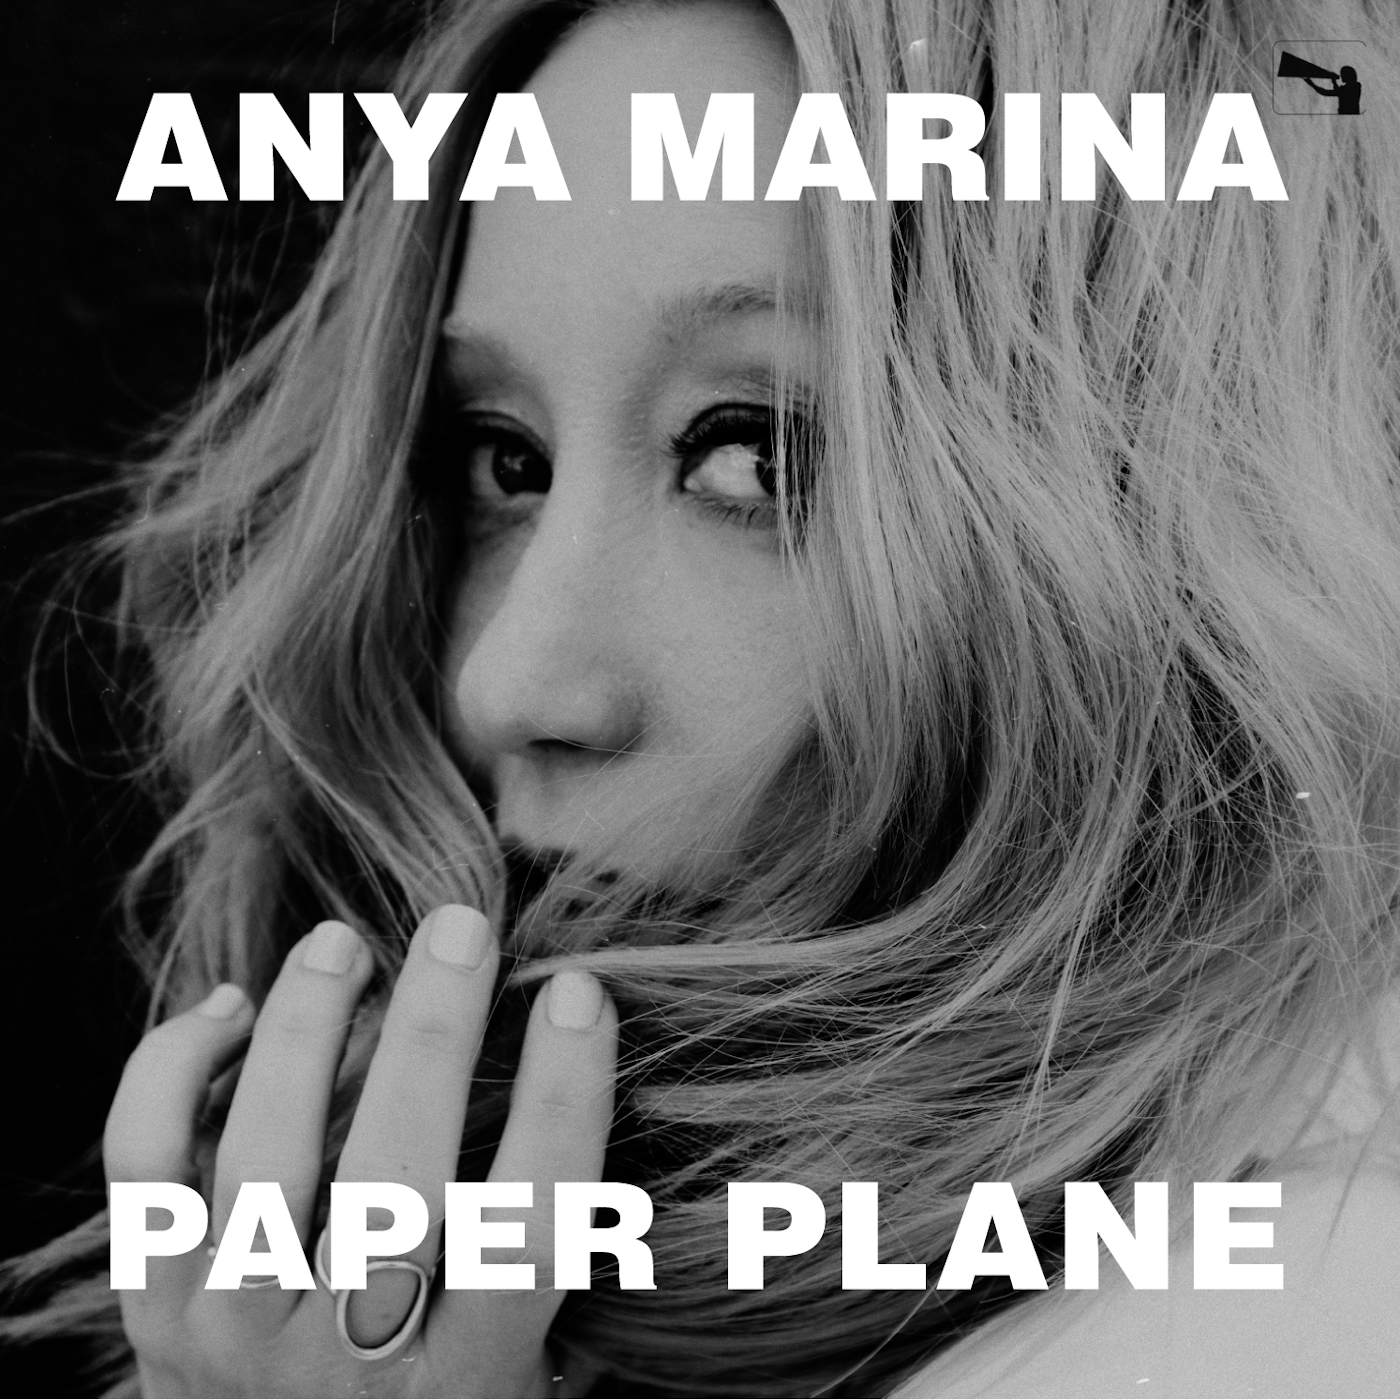 Anya Marina PAPER PLANE CD